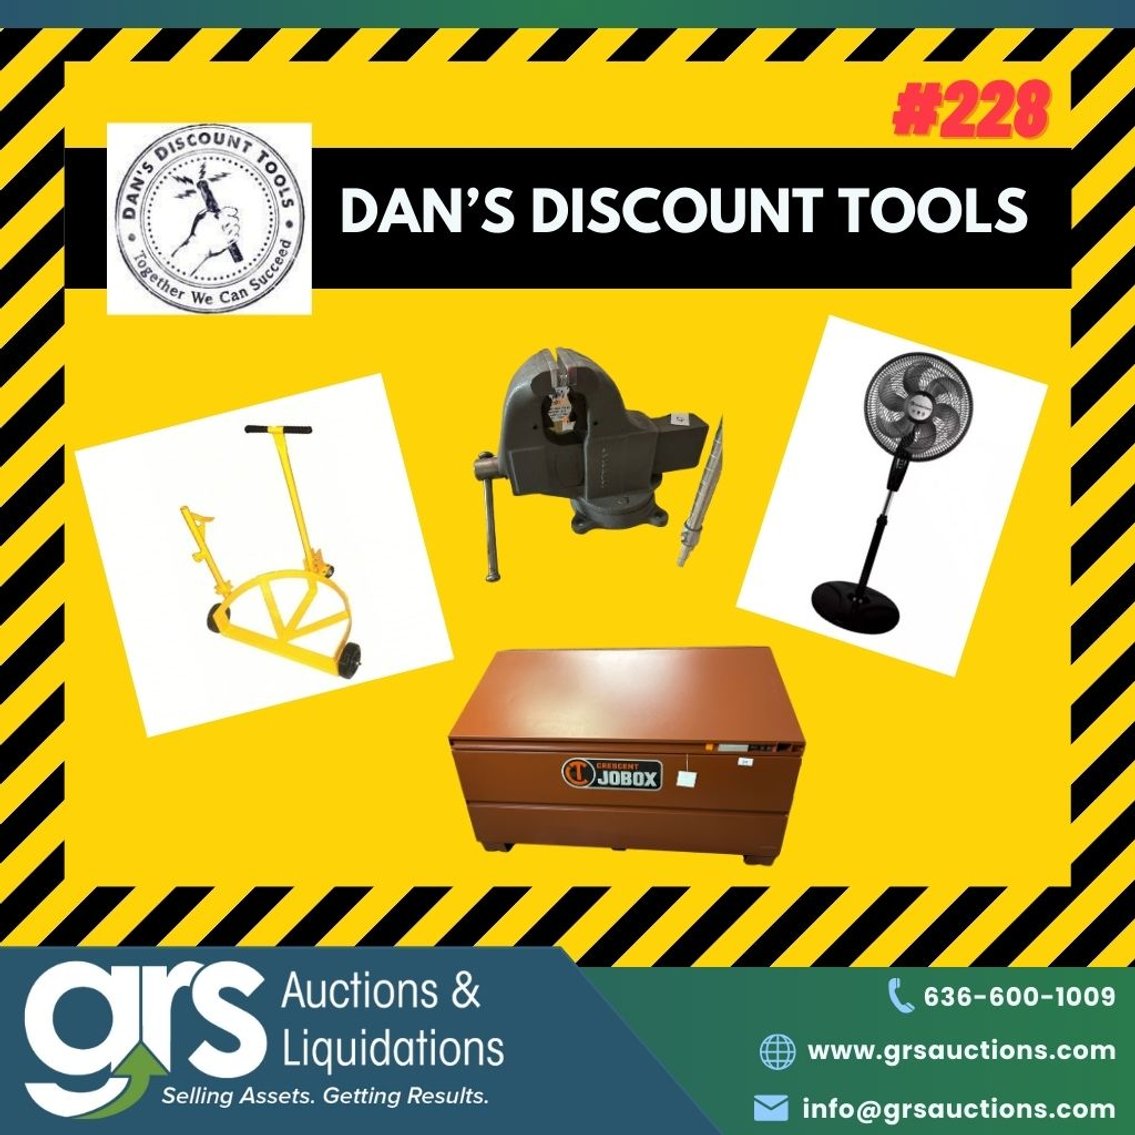 Dan's Discount Tools #228